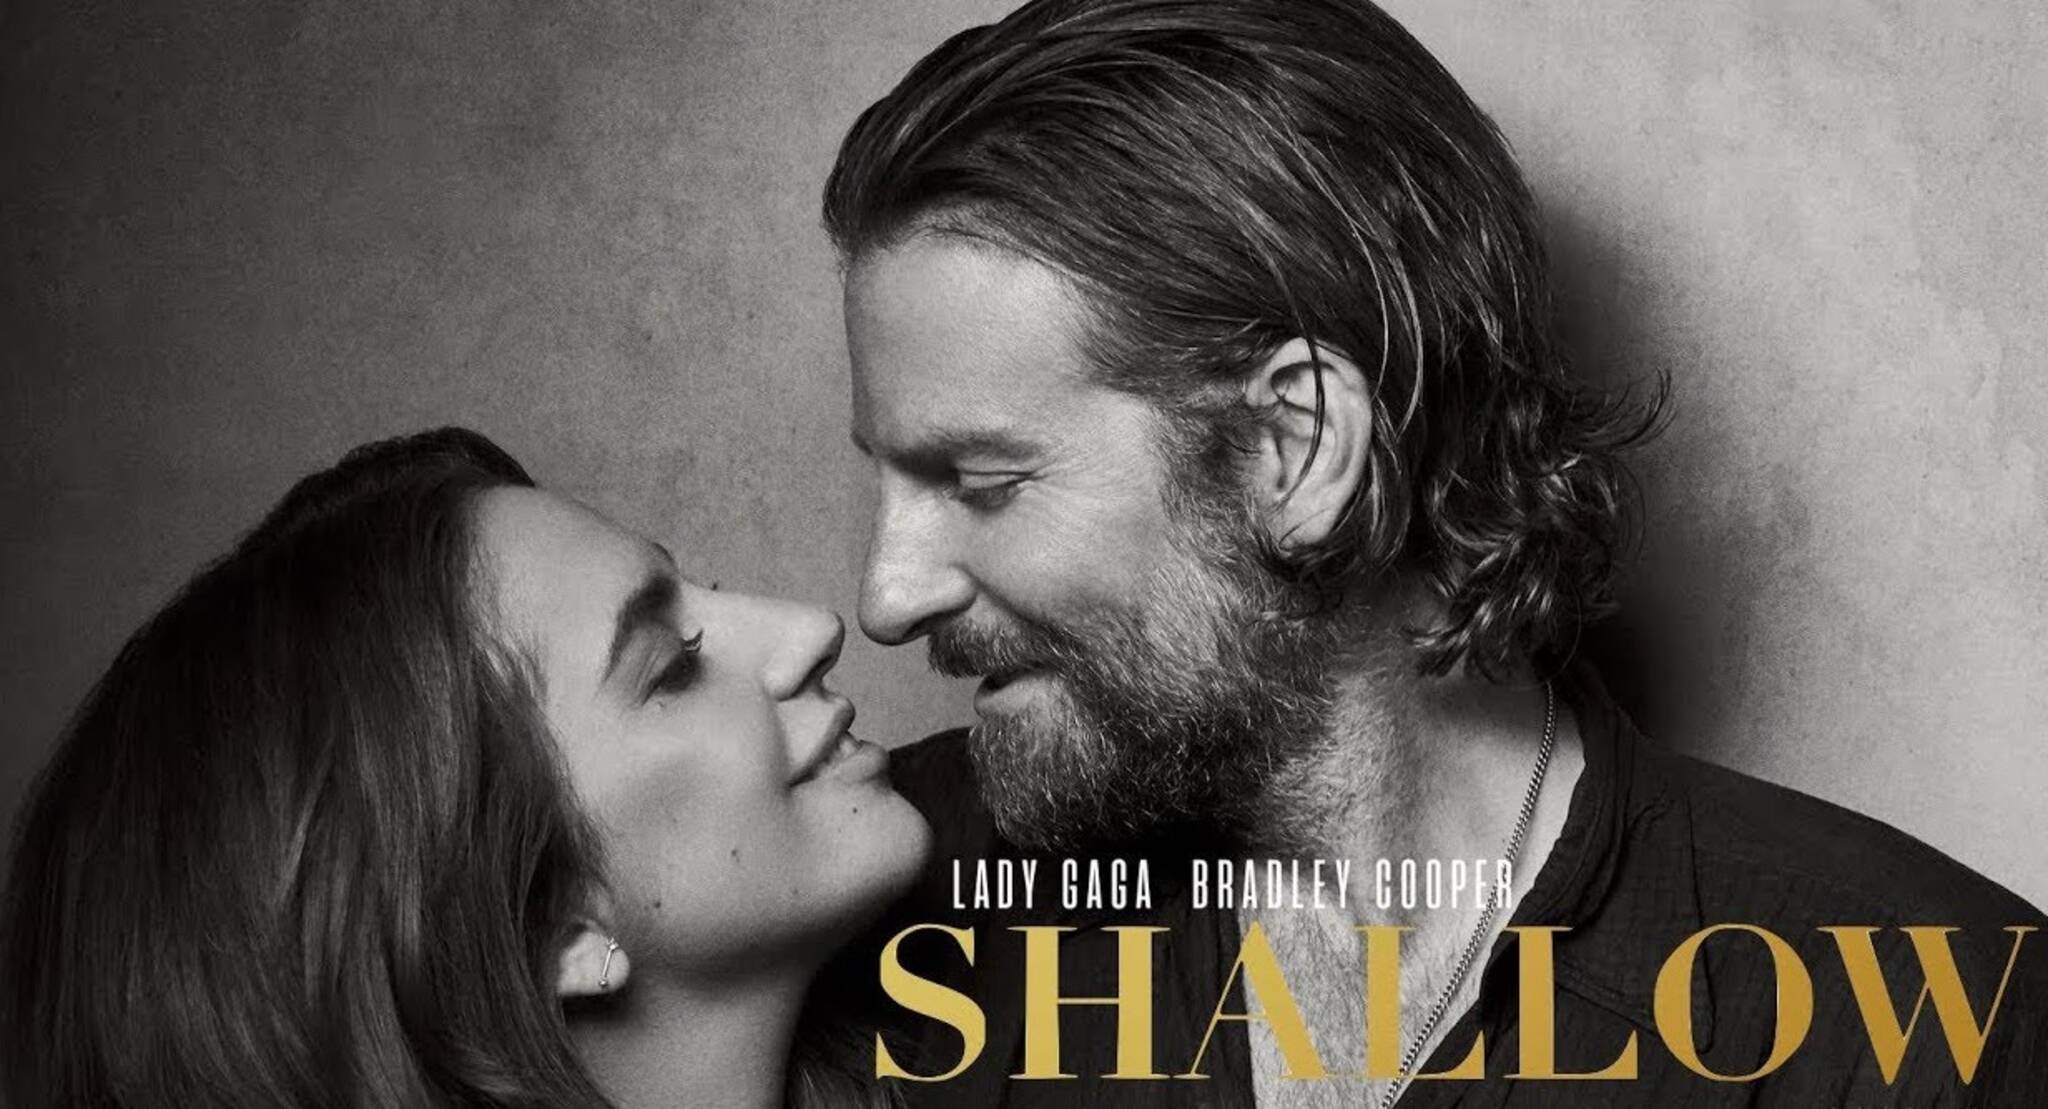 Леди гага и брэдли купер песня shallow. A Star is born Брэдли Купер. Shallow Брэдли Купер. Lady Gaga Bradley Cooper. Леди Гага Bradley Cooper shallow.